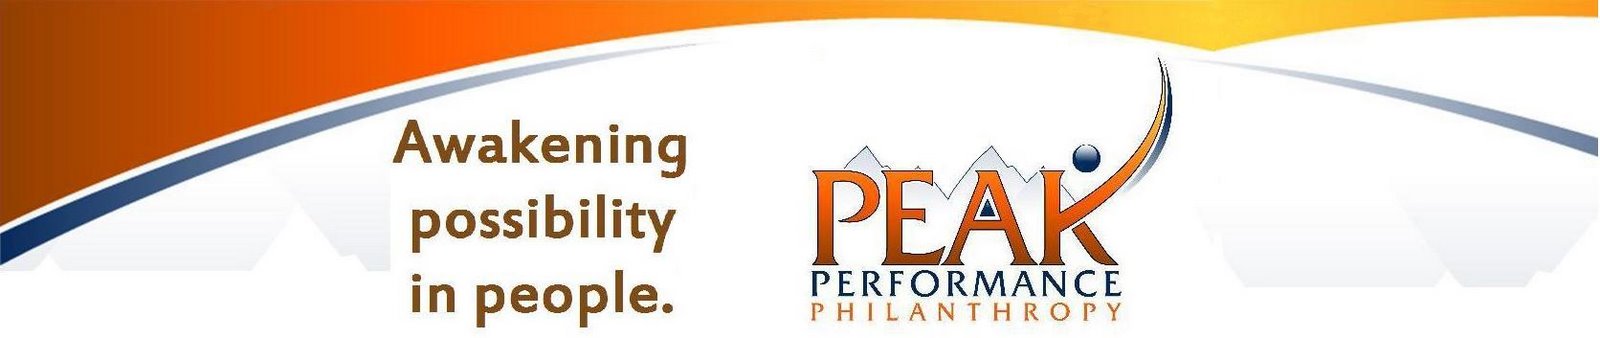 Peak Performance Philanthropy